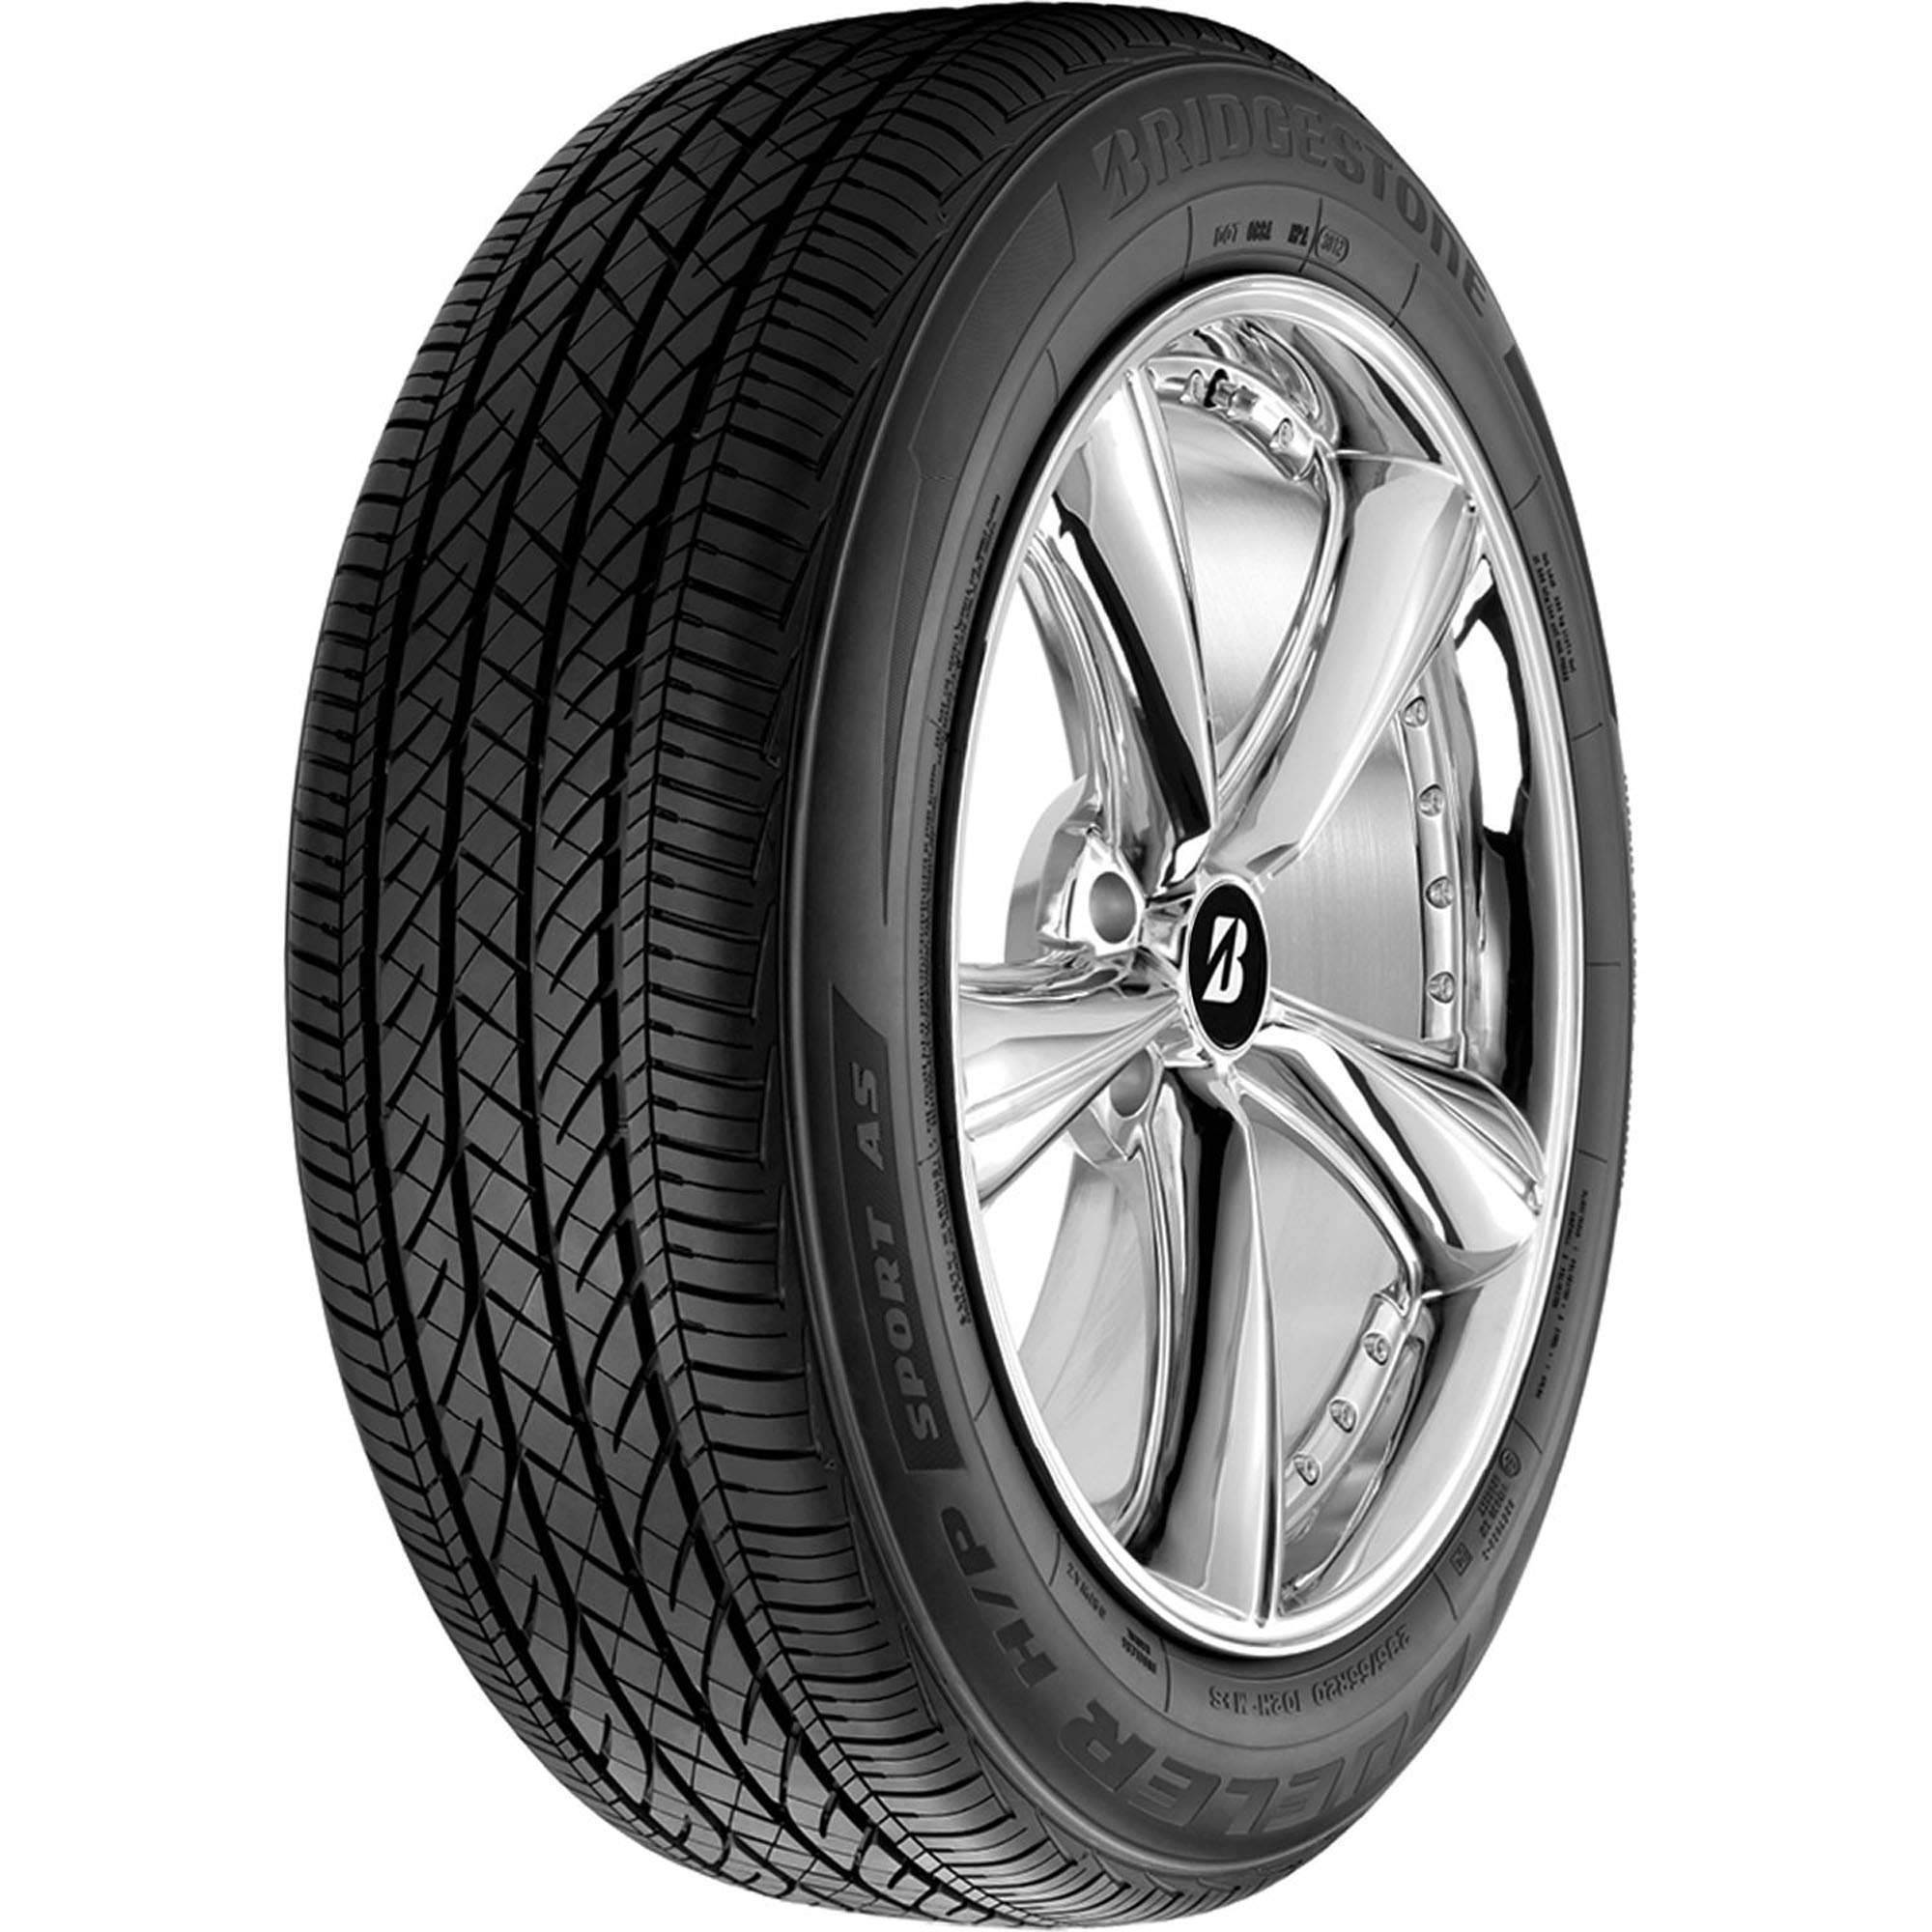 Bridgestone Dueler H/P Sport AS All Season 225/65R17 102T Passenger Tire - image 1 of 4